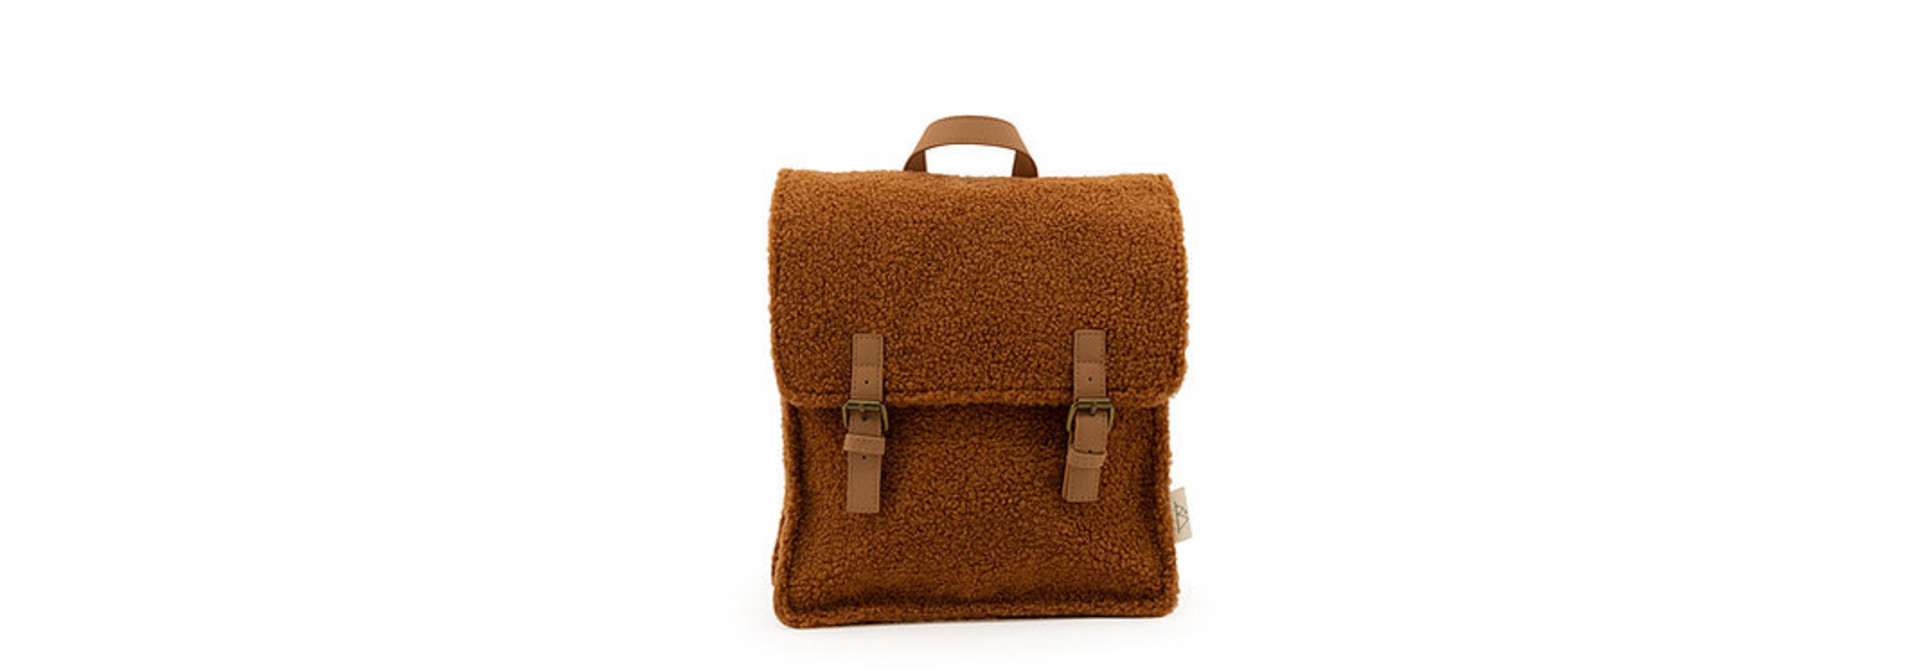 Teddy backpack - caramel